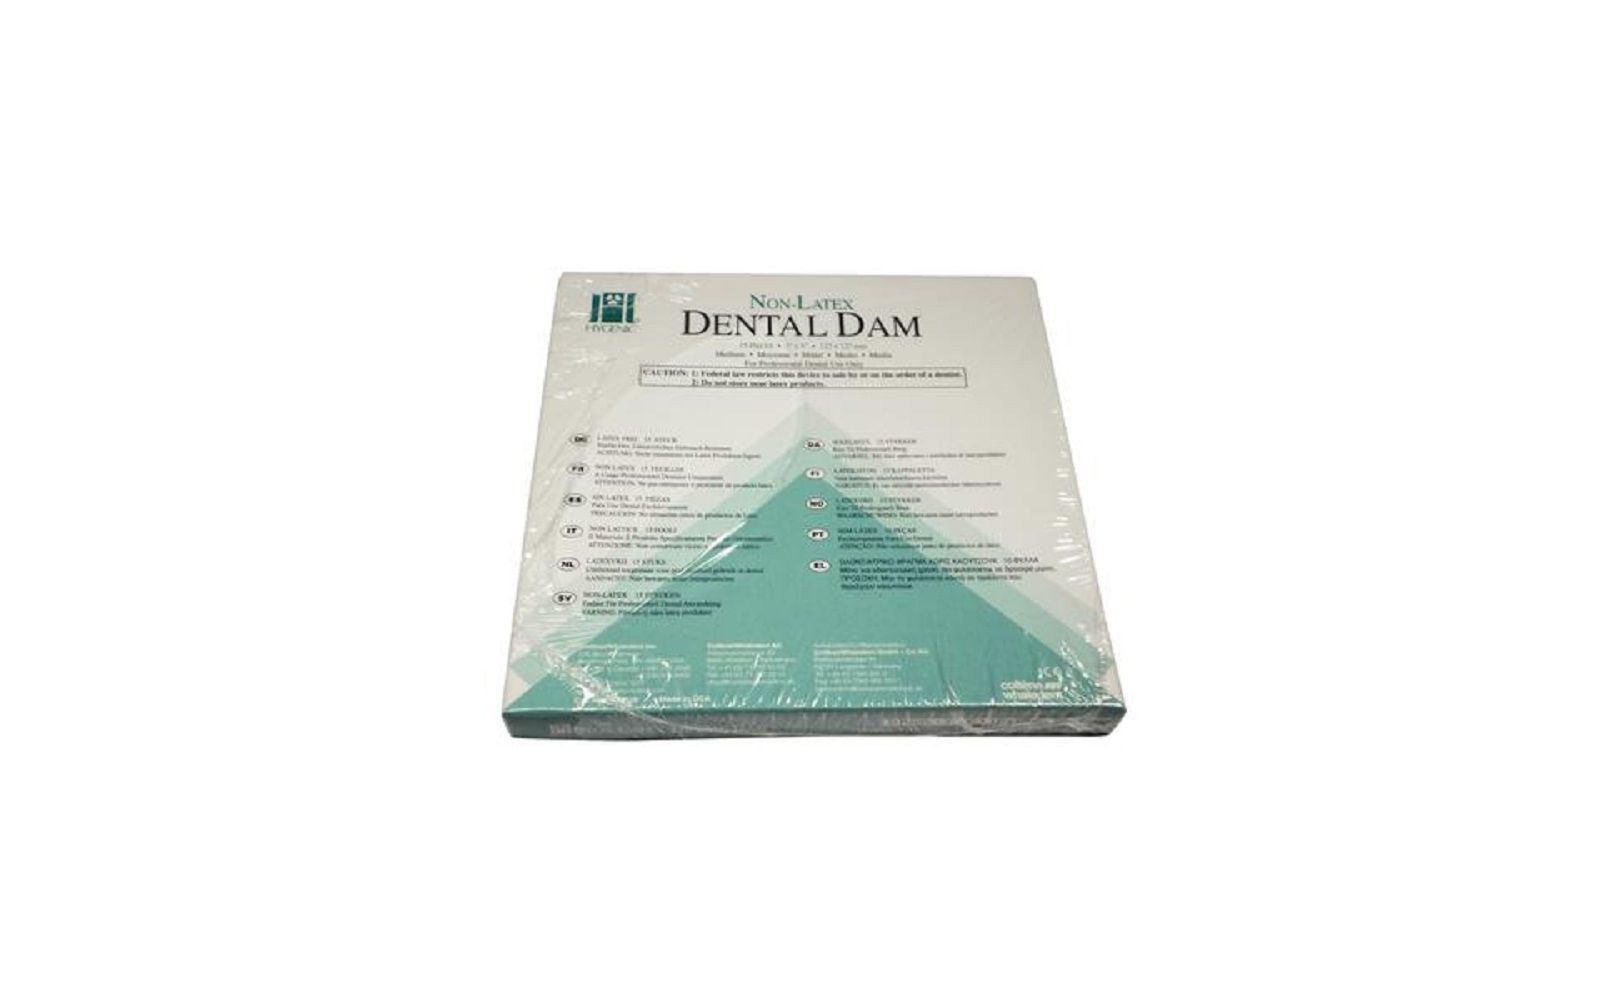 Hygenic® nonlatex dental dam - coltene